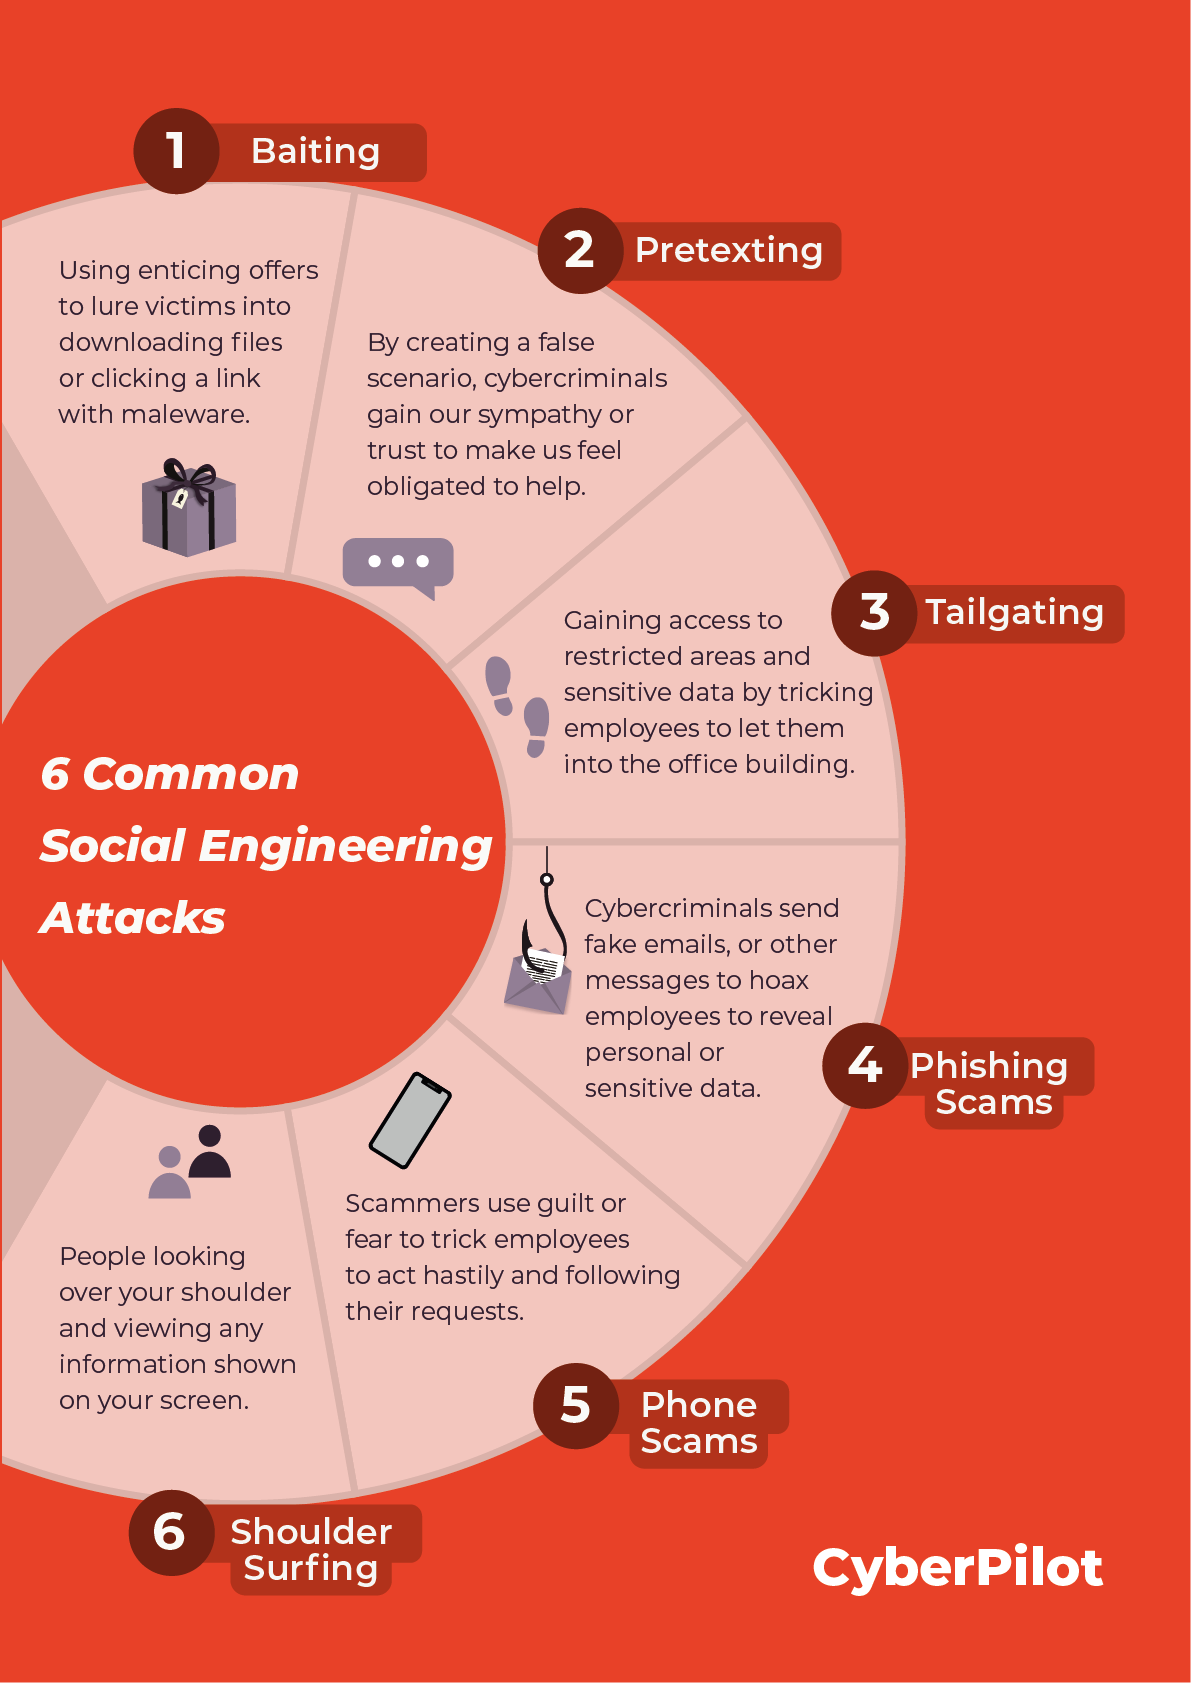 6 Common Social Engineeering Attacks